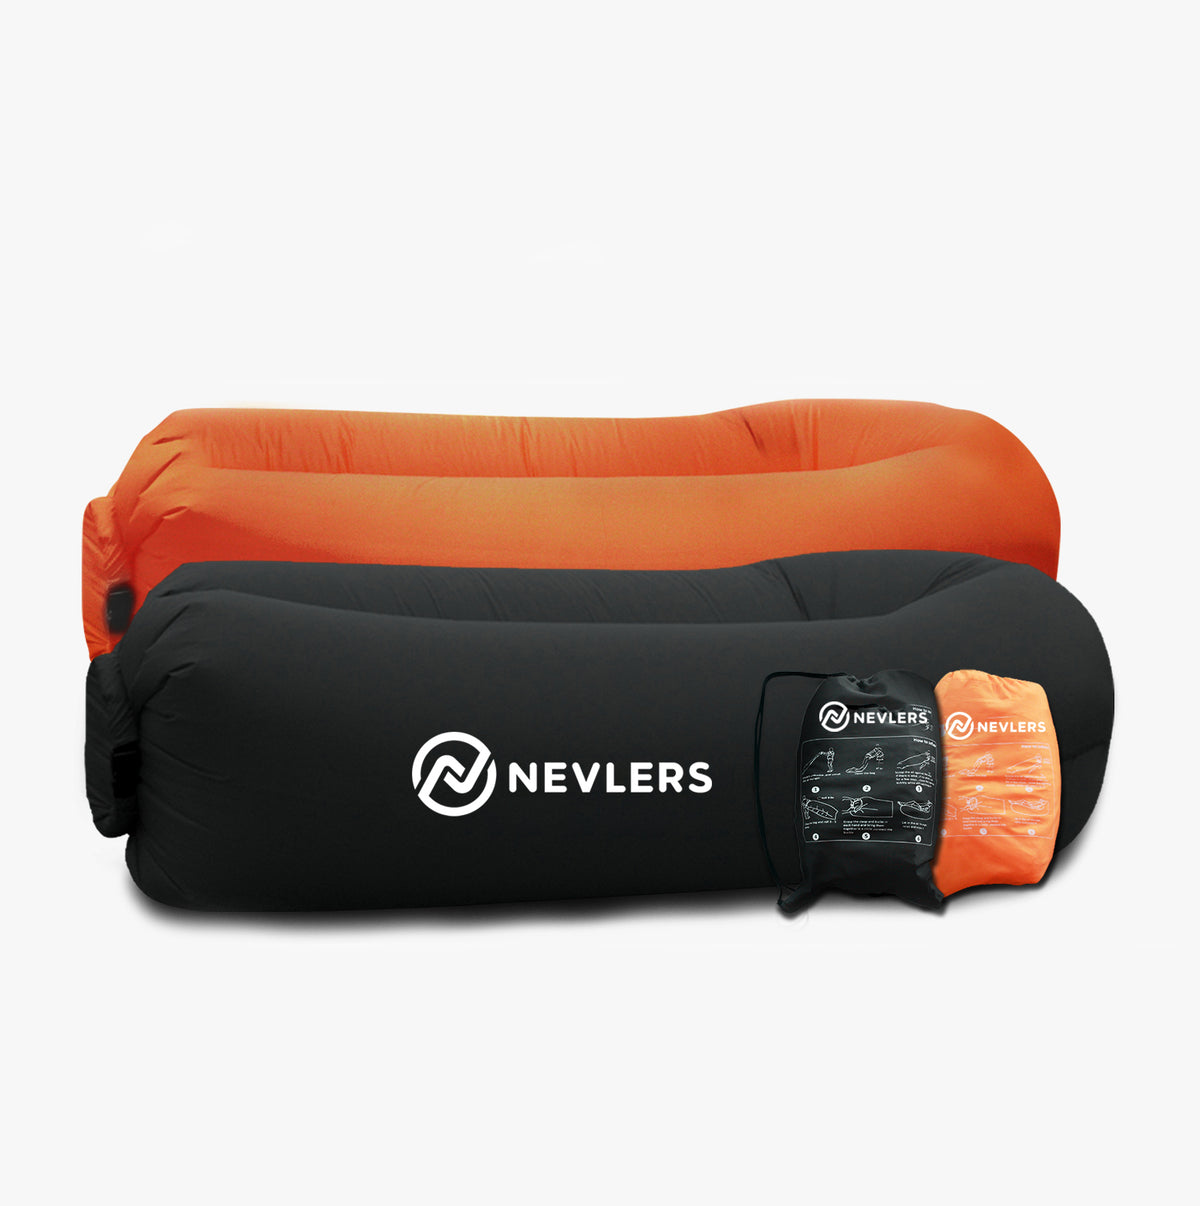 Inflatable Loungers - Orange/Black - 2 Pack